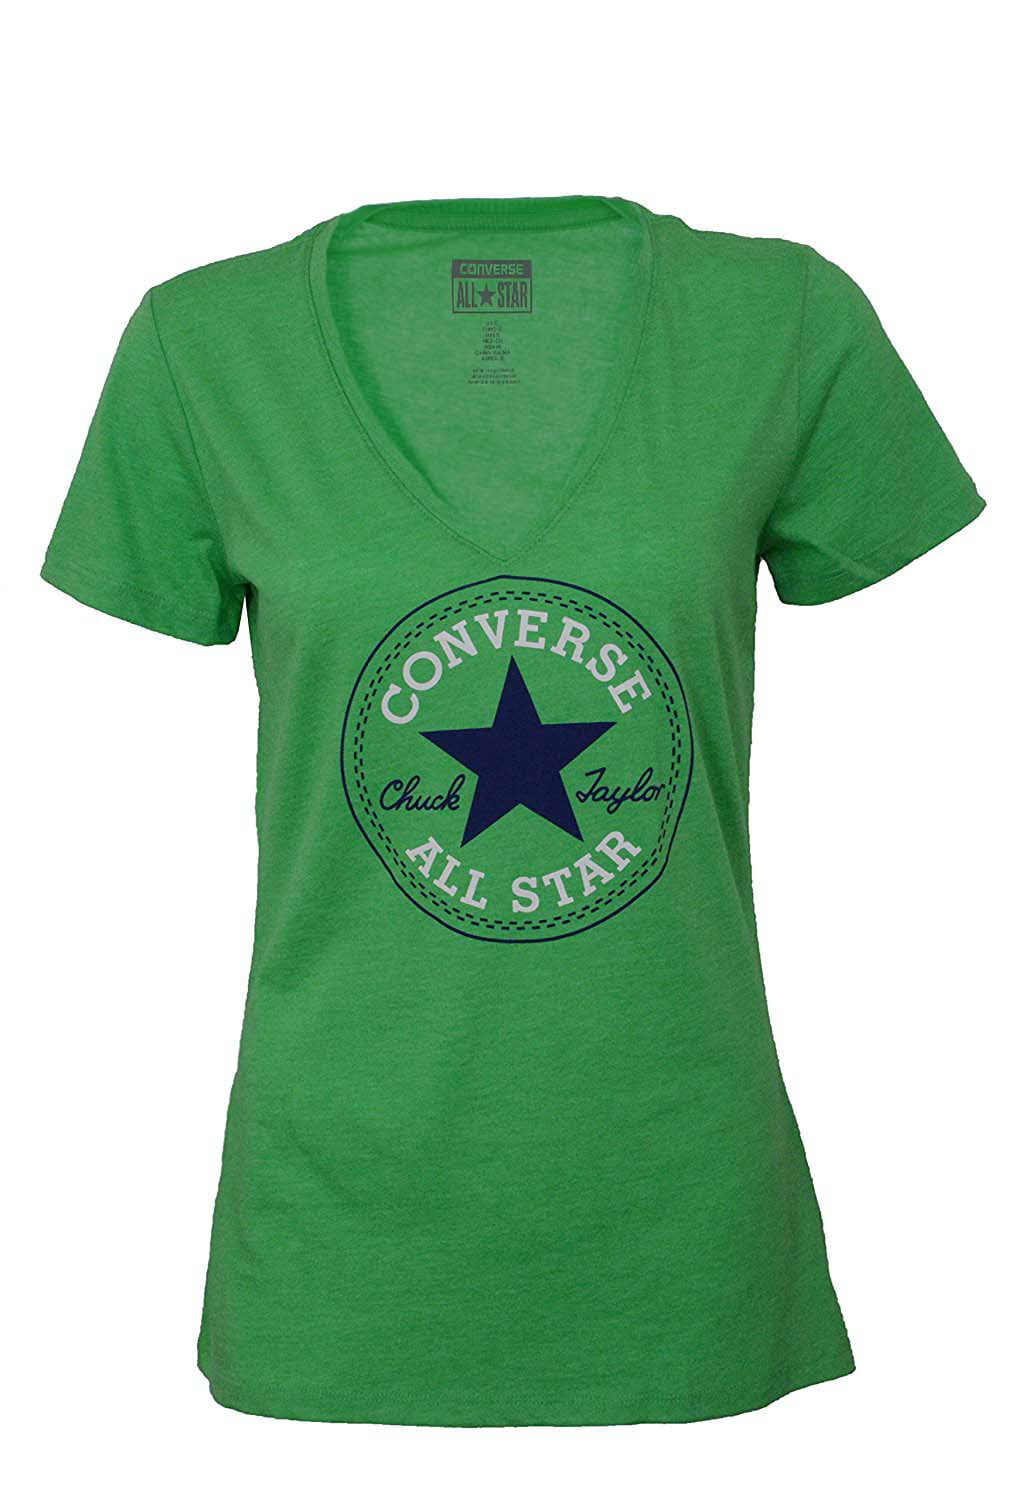 Converse - Converse Women's All Star Chuck Taylor V-Neck T-Shirt-Kelly ...